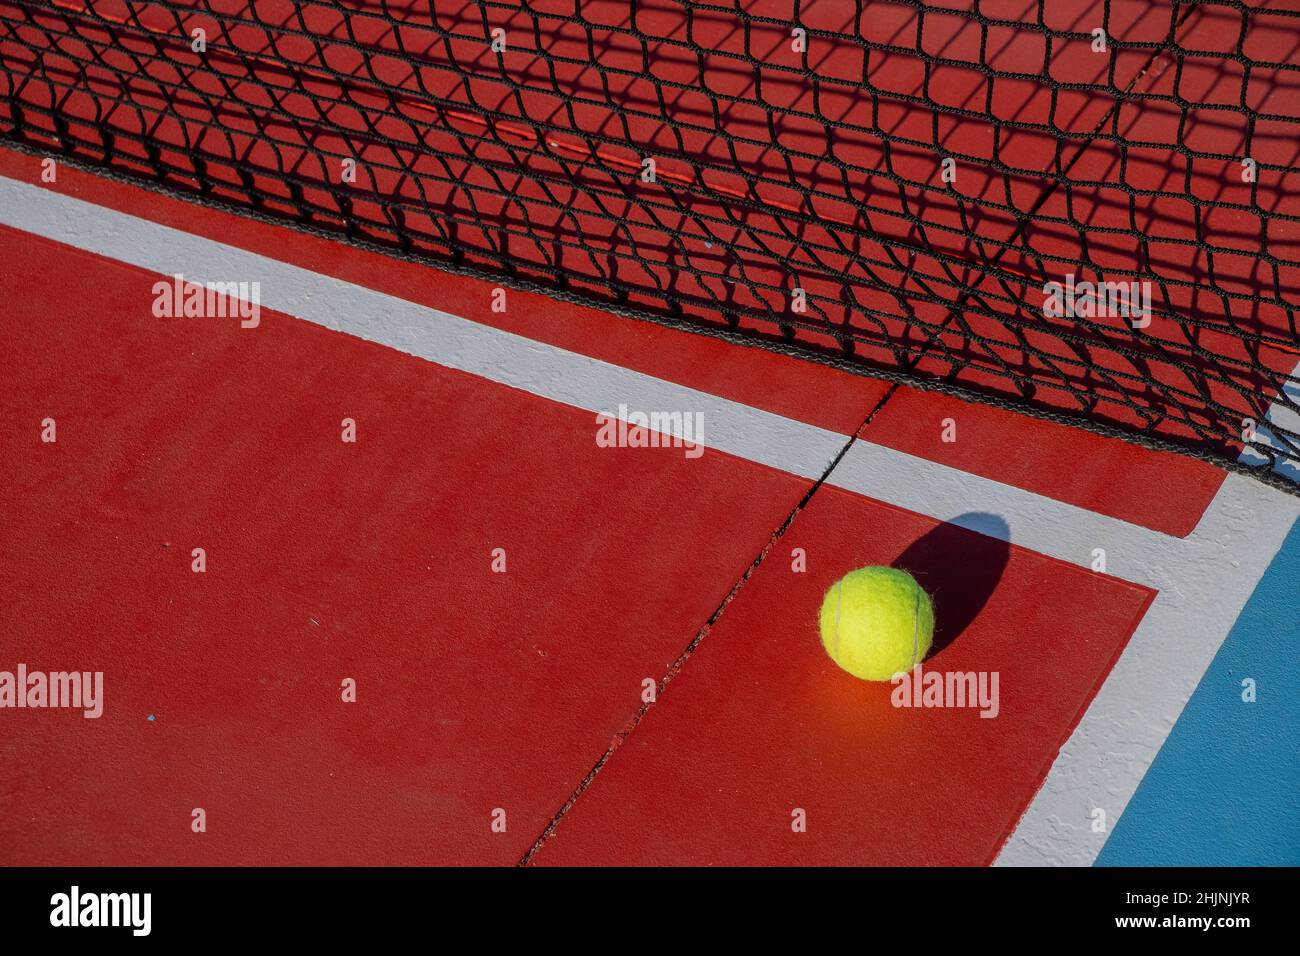 Pelota de tenis junto a la red de una cancha de tenis de superficie dura roja. Concepto deportivo de raqueta. Foto de stock